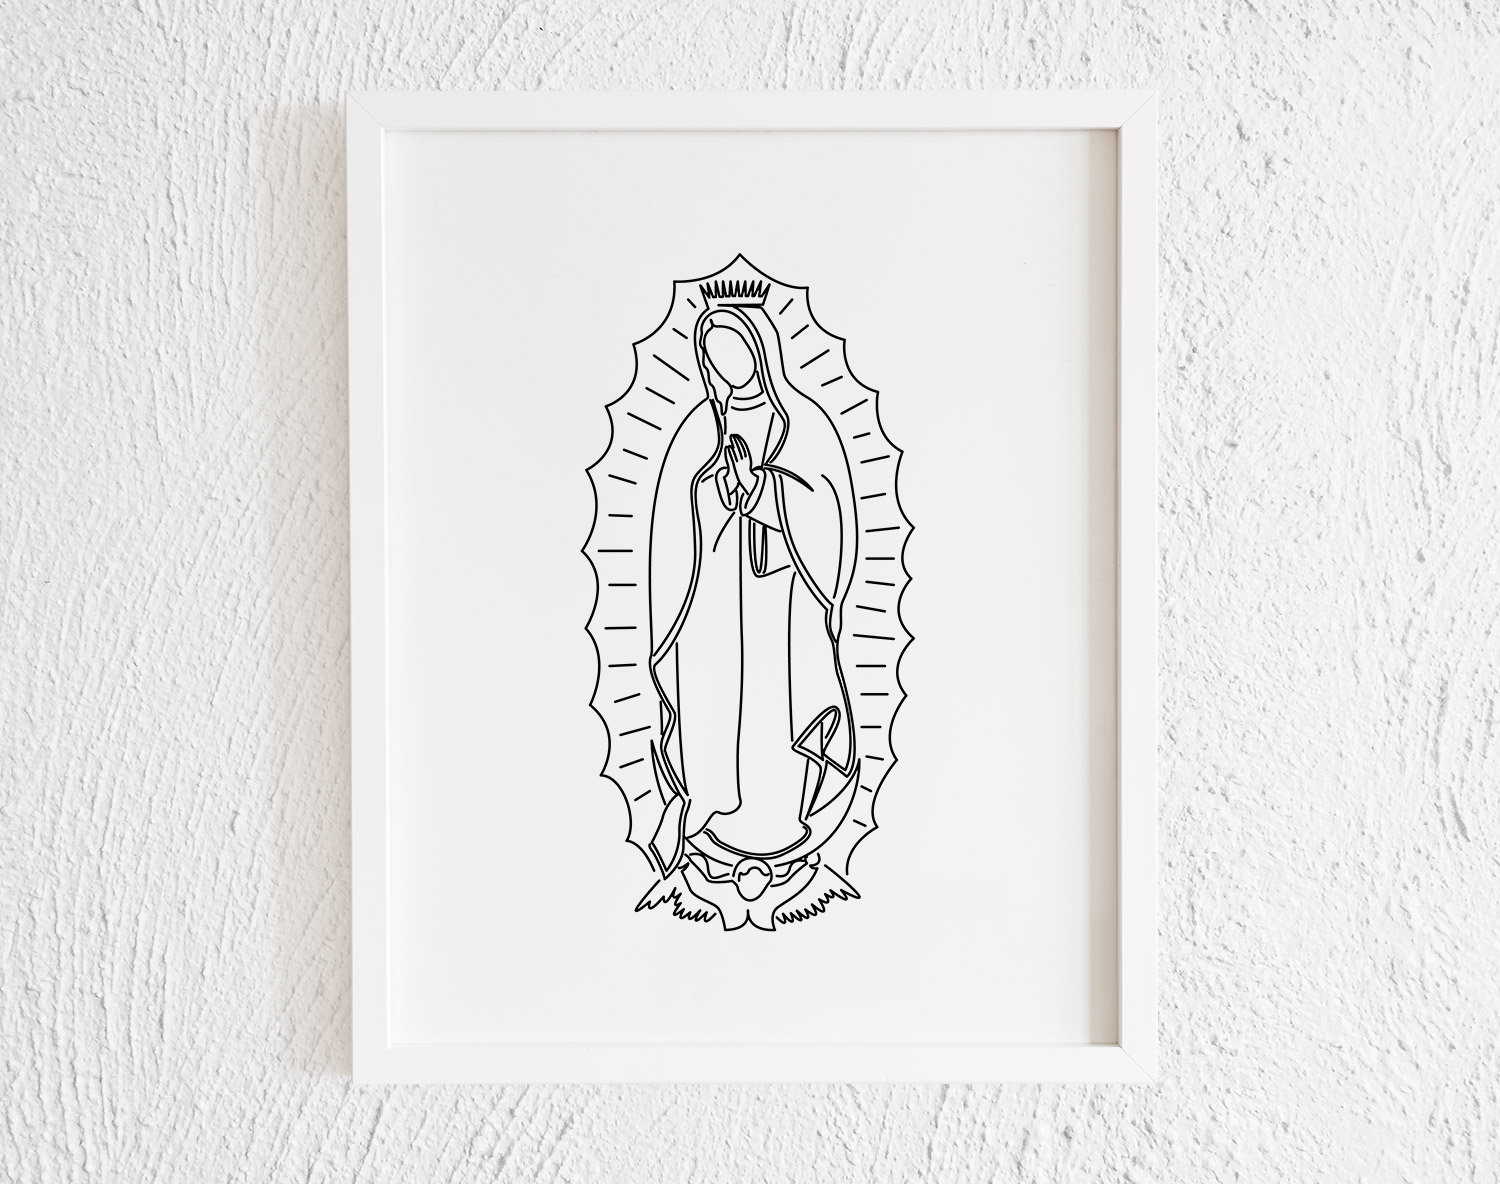 Actualizar Imagen Dibujos Faciles De La Virgen De Guadalupe Thptletrongtan Edu Vn